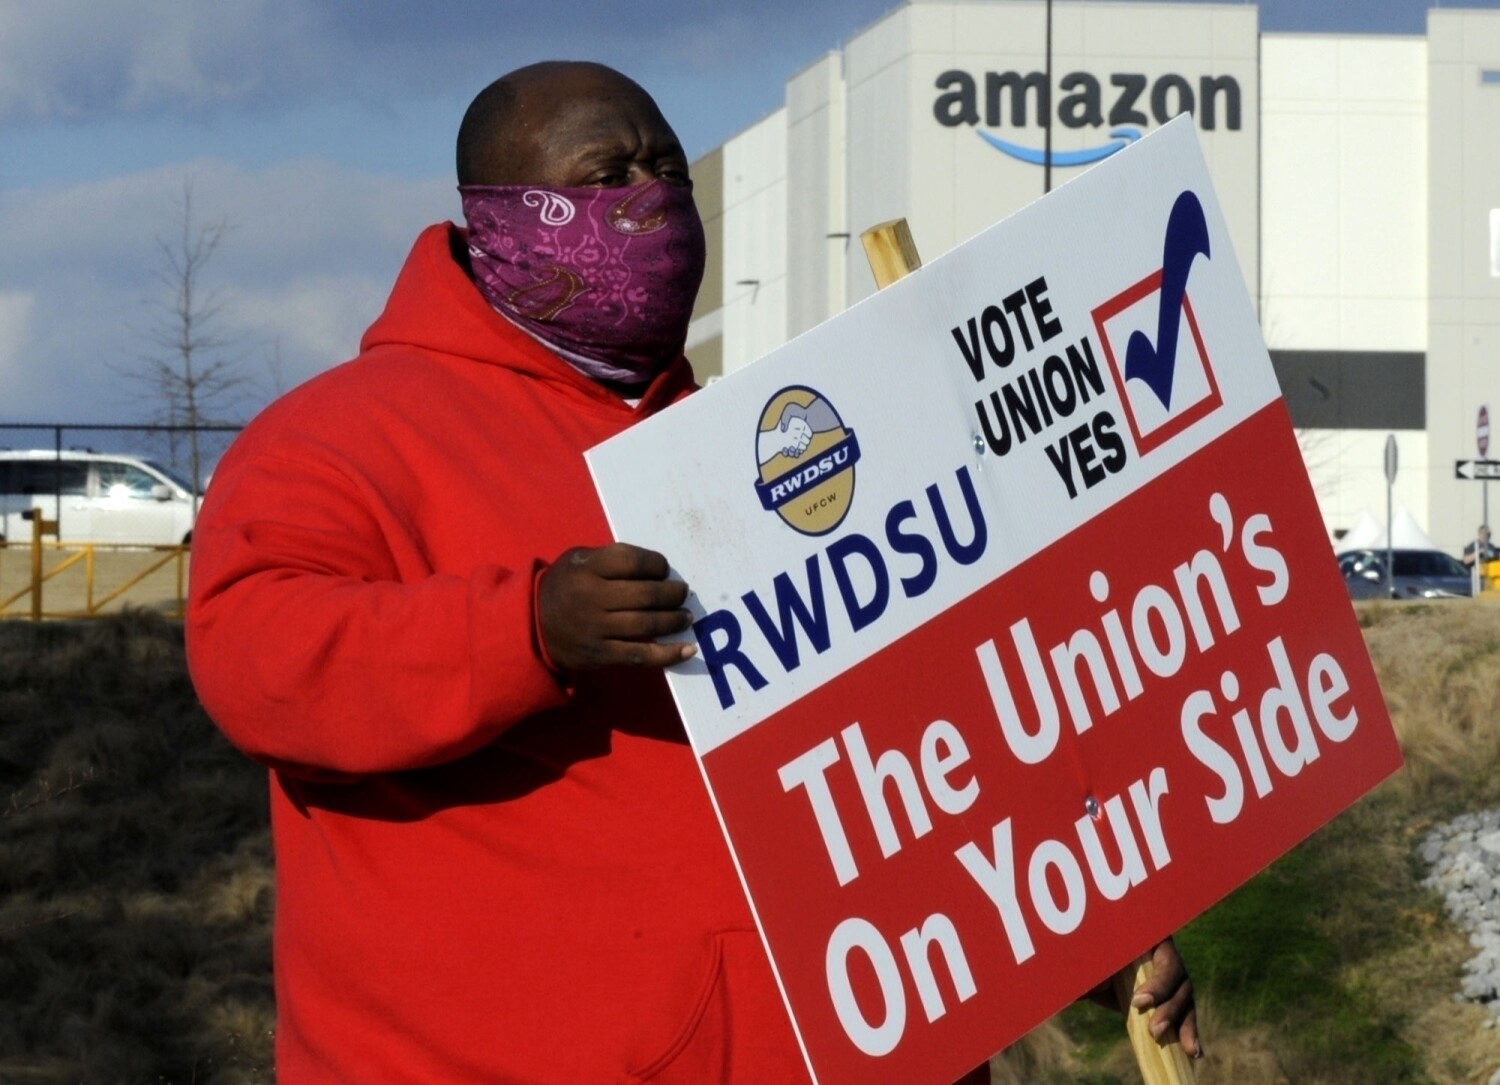 Teamsters vow to unionize Amazon, taking on an anti-union behemoth